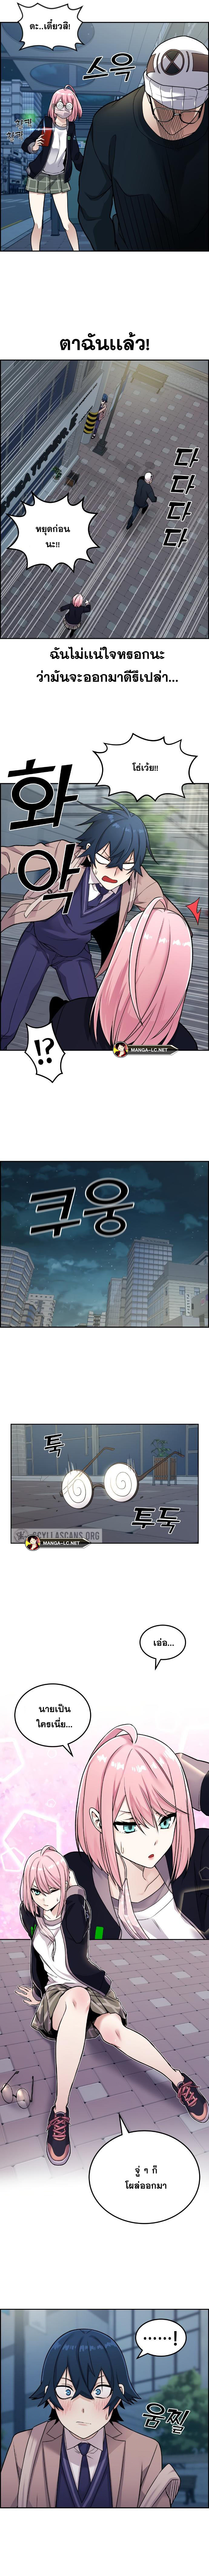 Webtoon Character Na Kang Lim ร ยธโ€ขร ยธยญร ยธโขร ยธโ€”ร ยธยตร ยนห 13 (12)